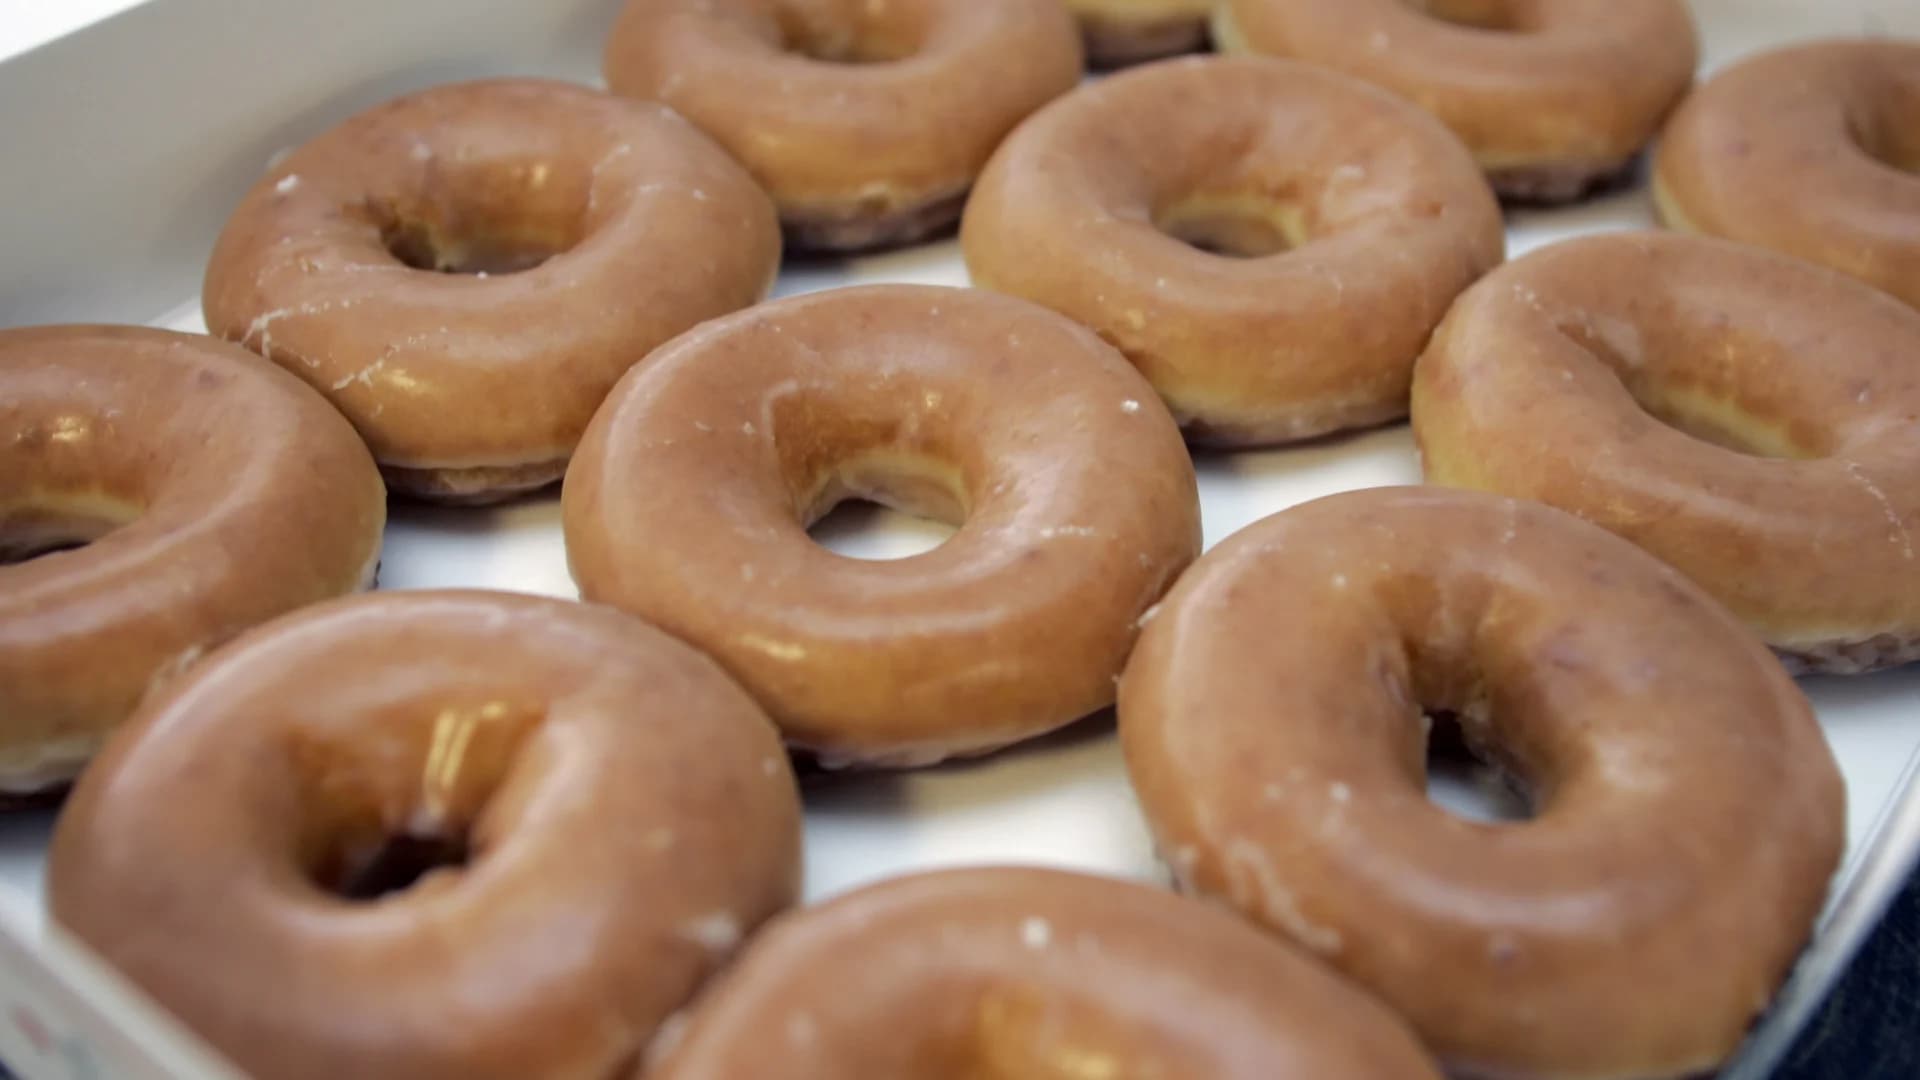 Krispy Kreme sets up shop in new South Bronx location